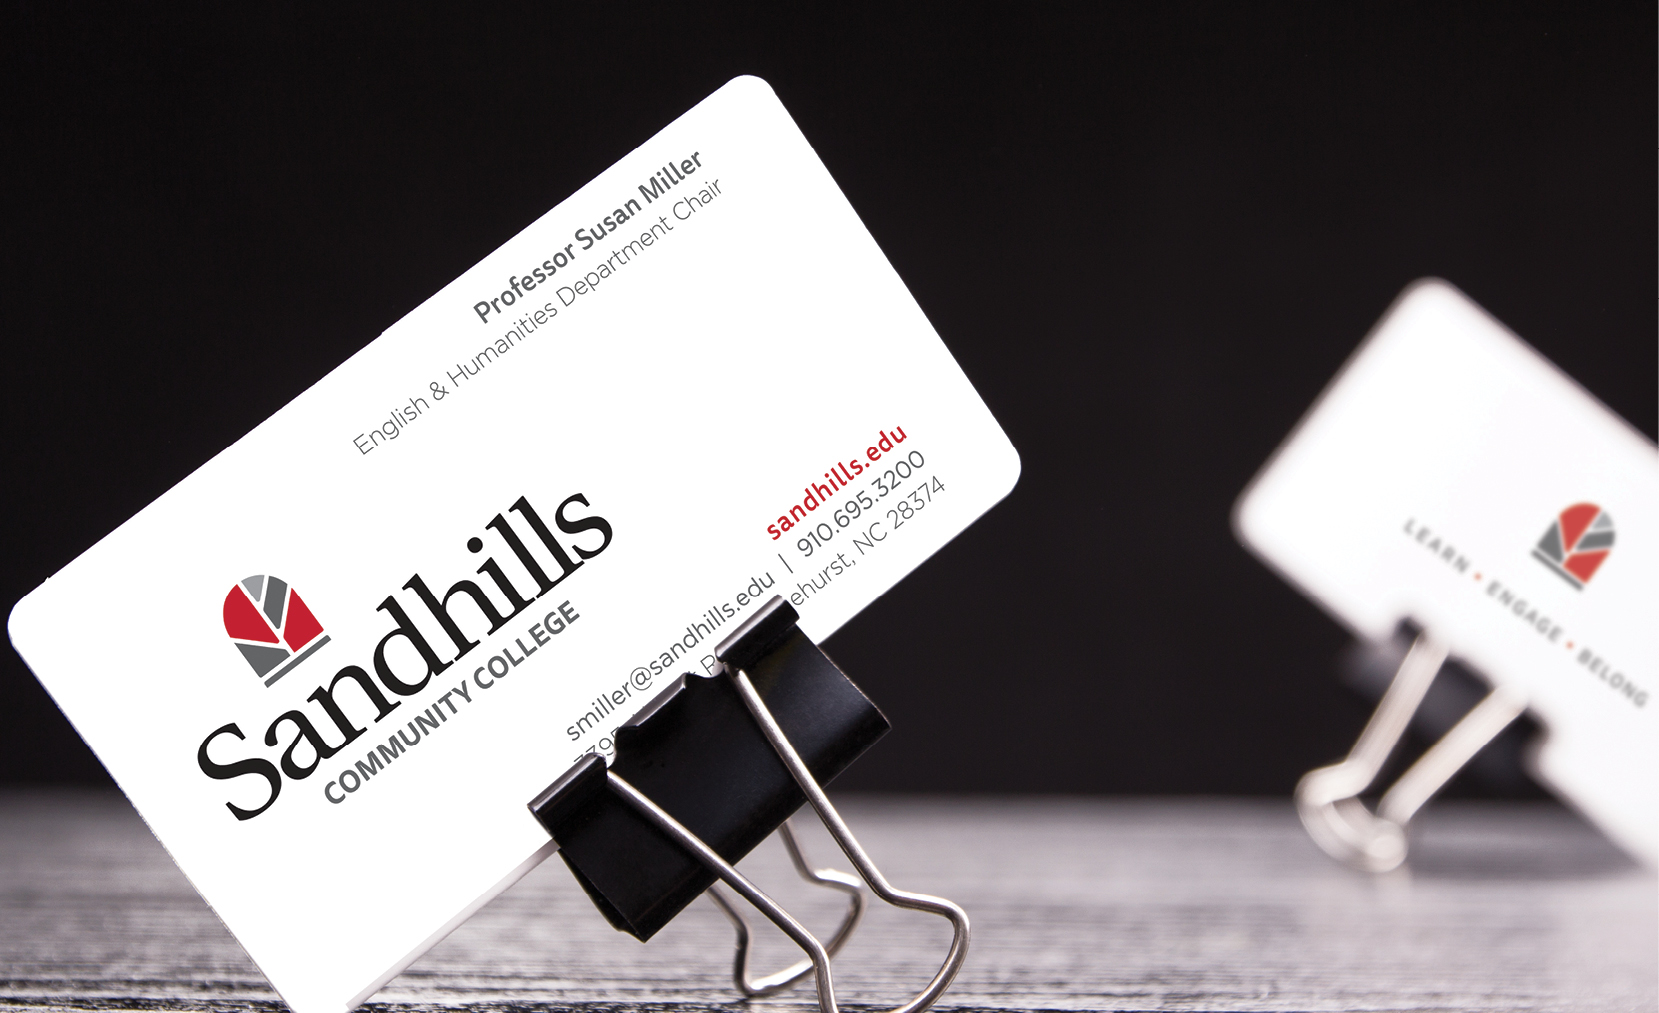 Sandhills Community College Branding